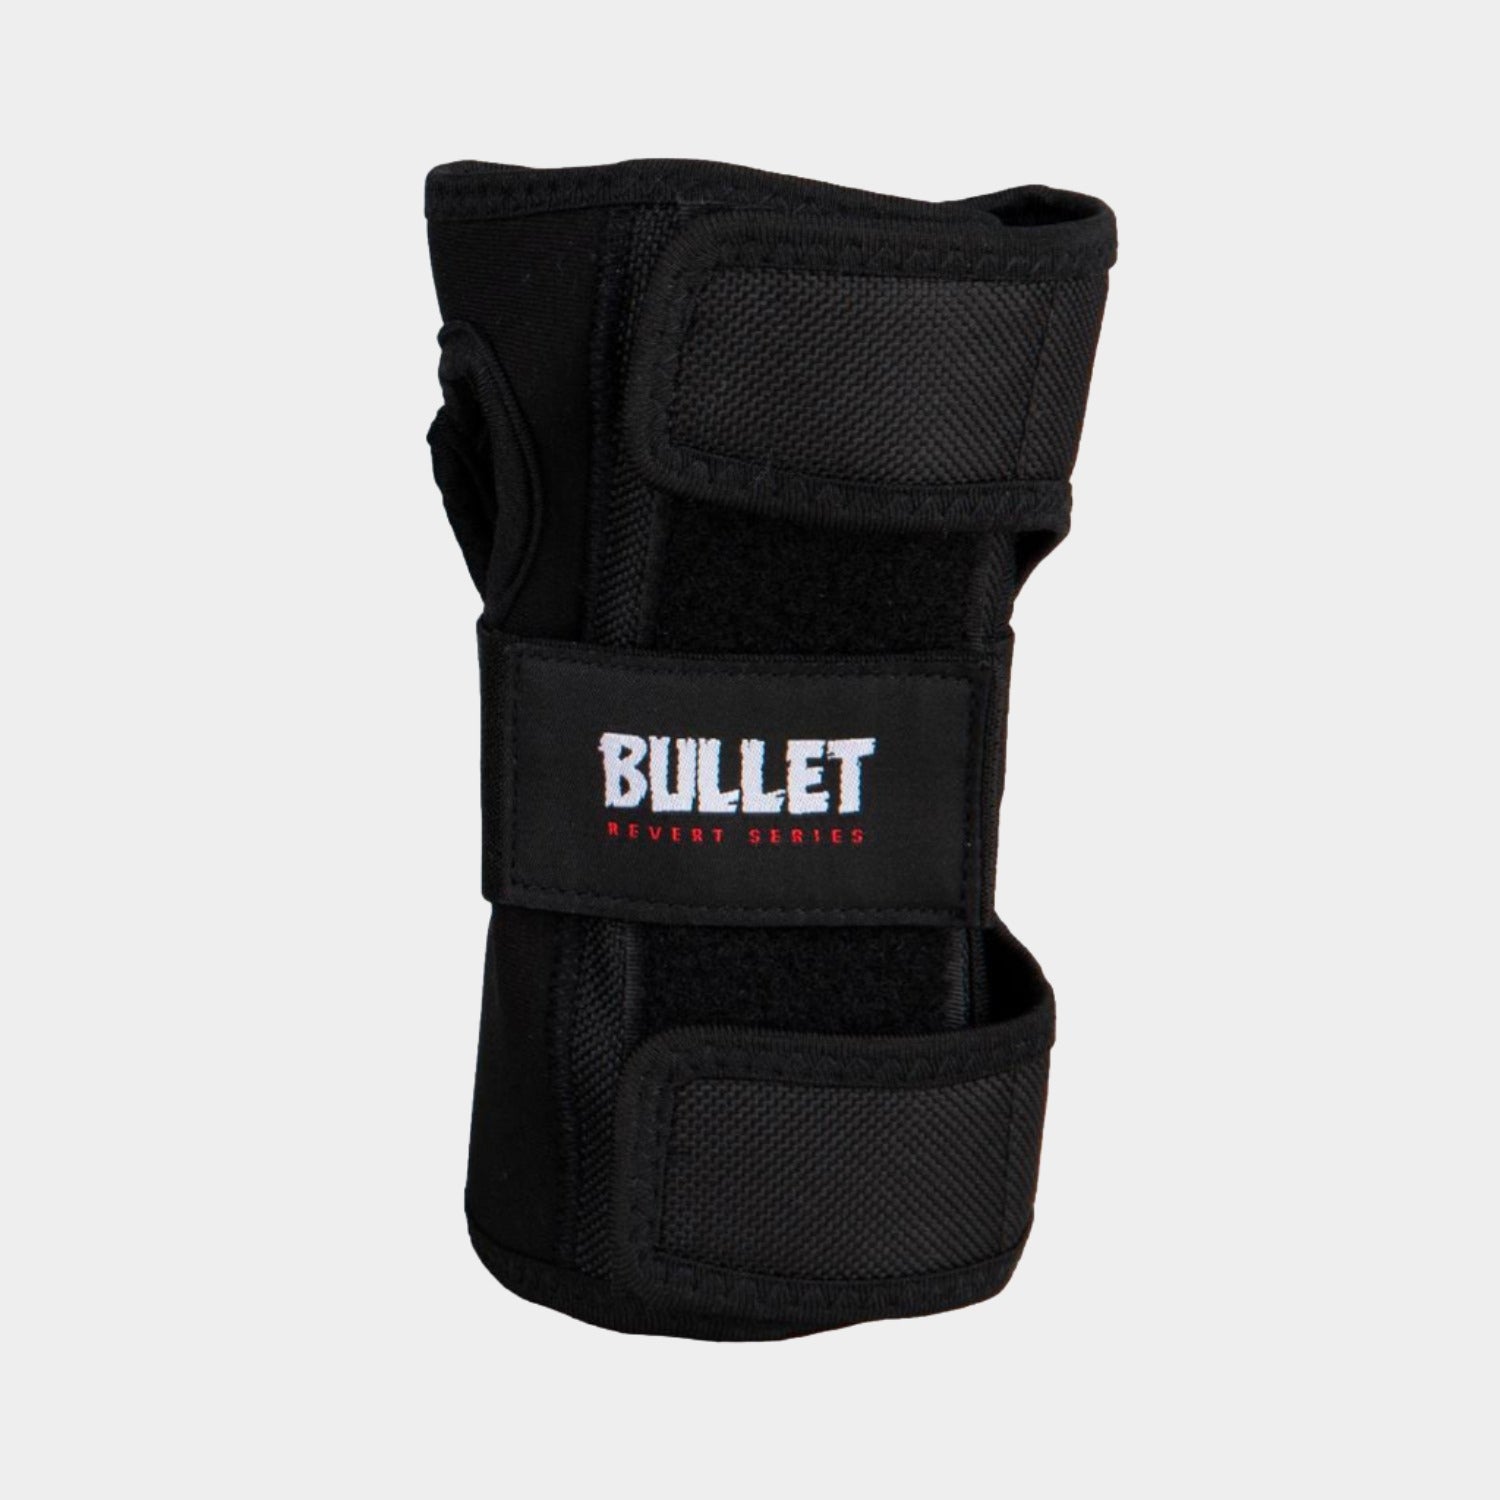 Bullet Pads Revert Wrist Guards - Black - Prime Delux Store